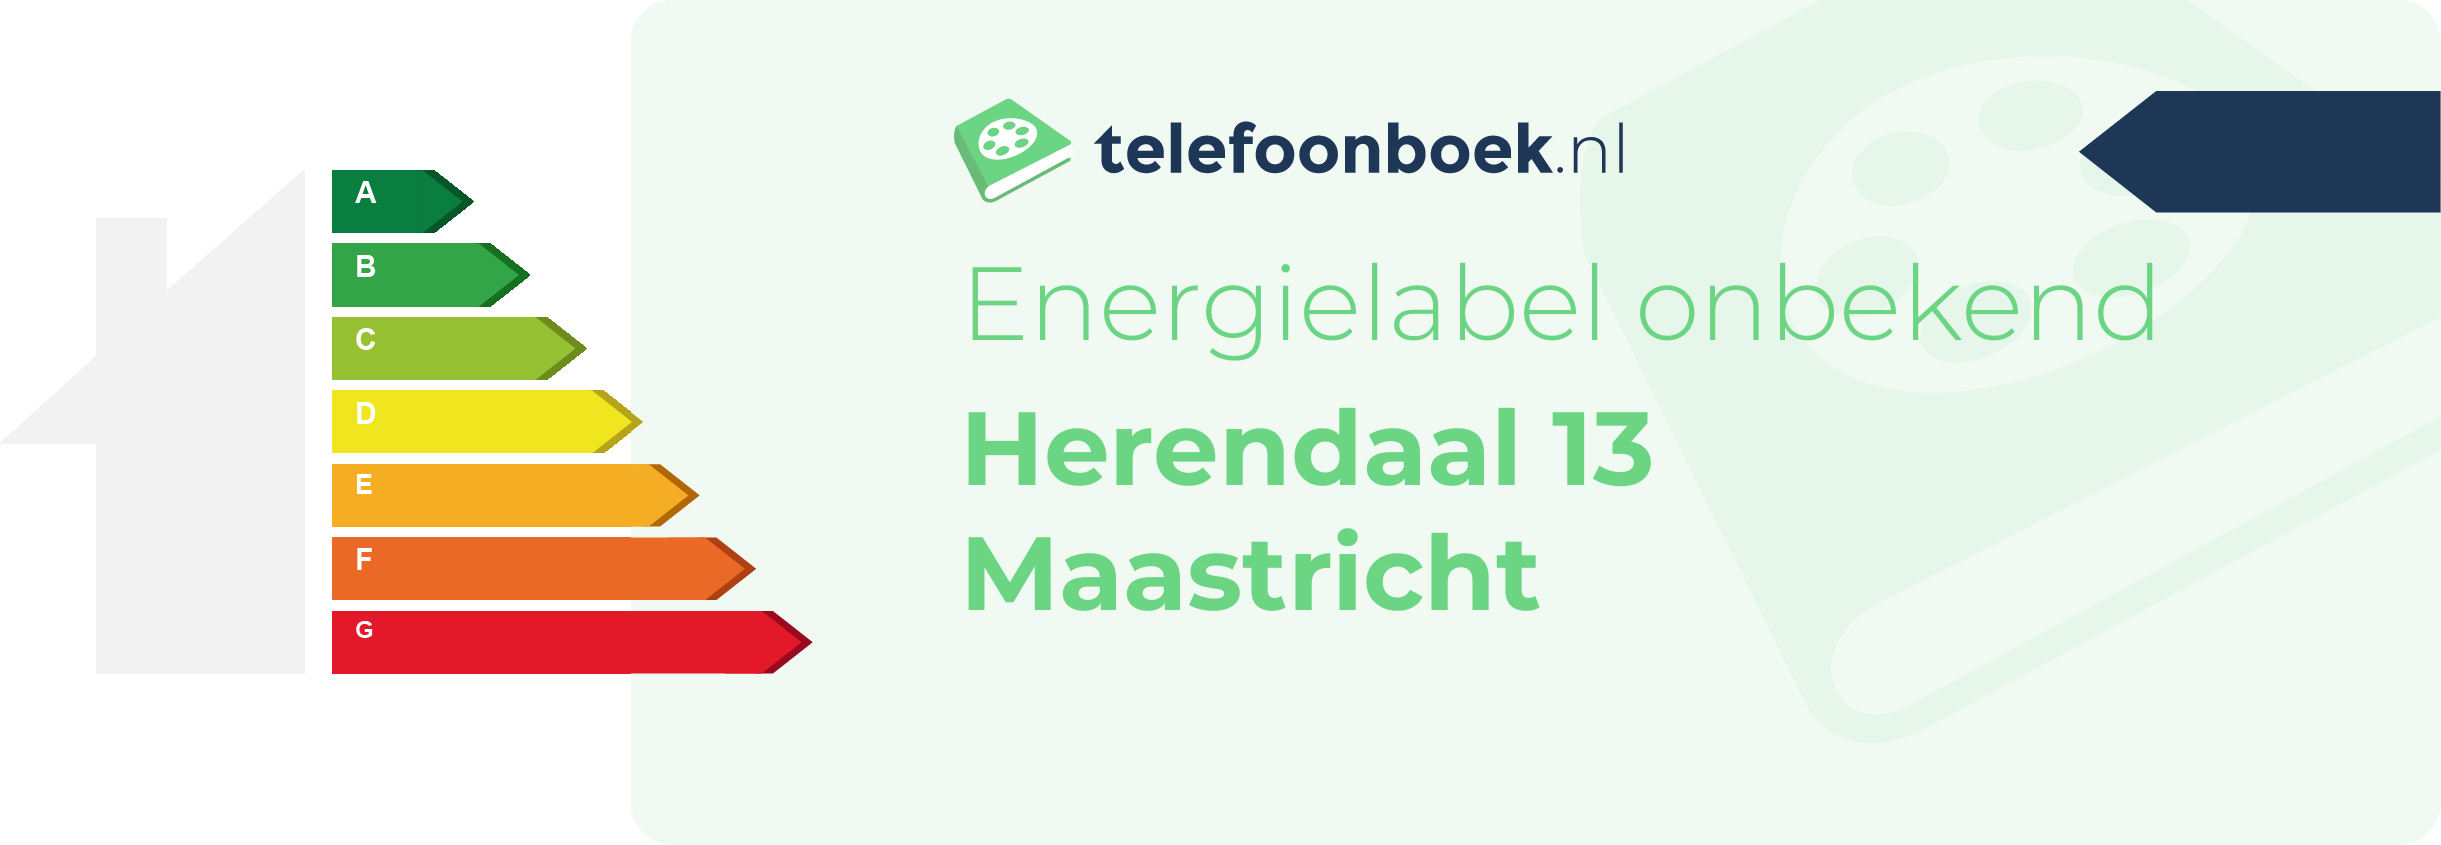 Energielabel Herendaal 13 Maastricht